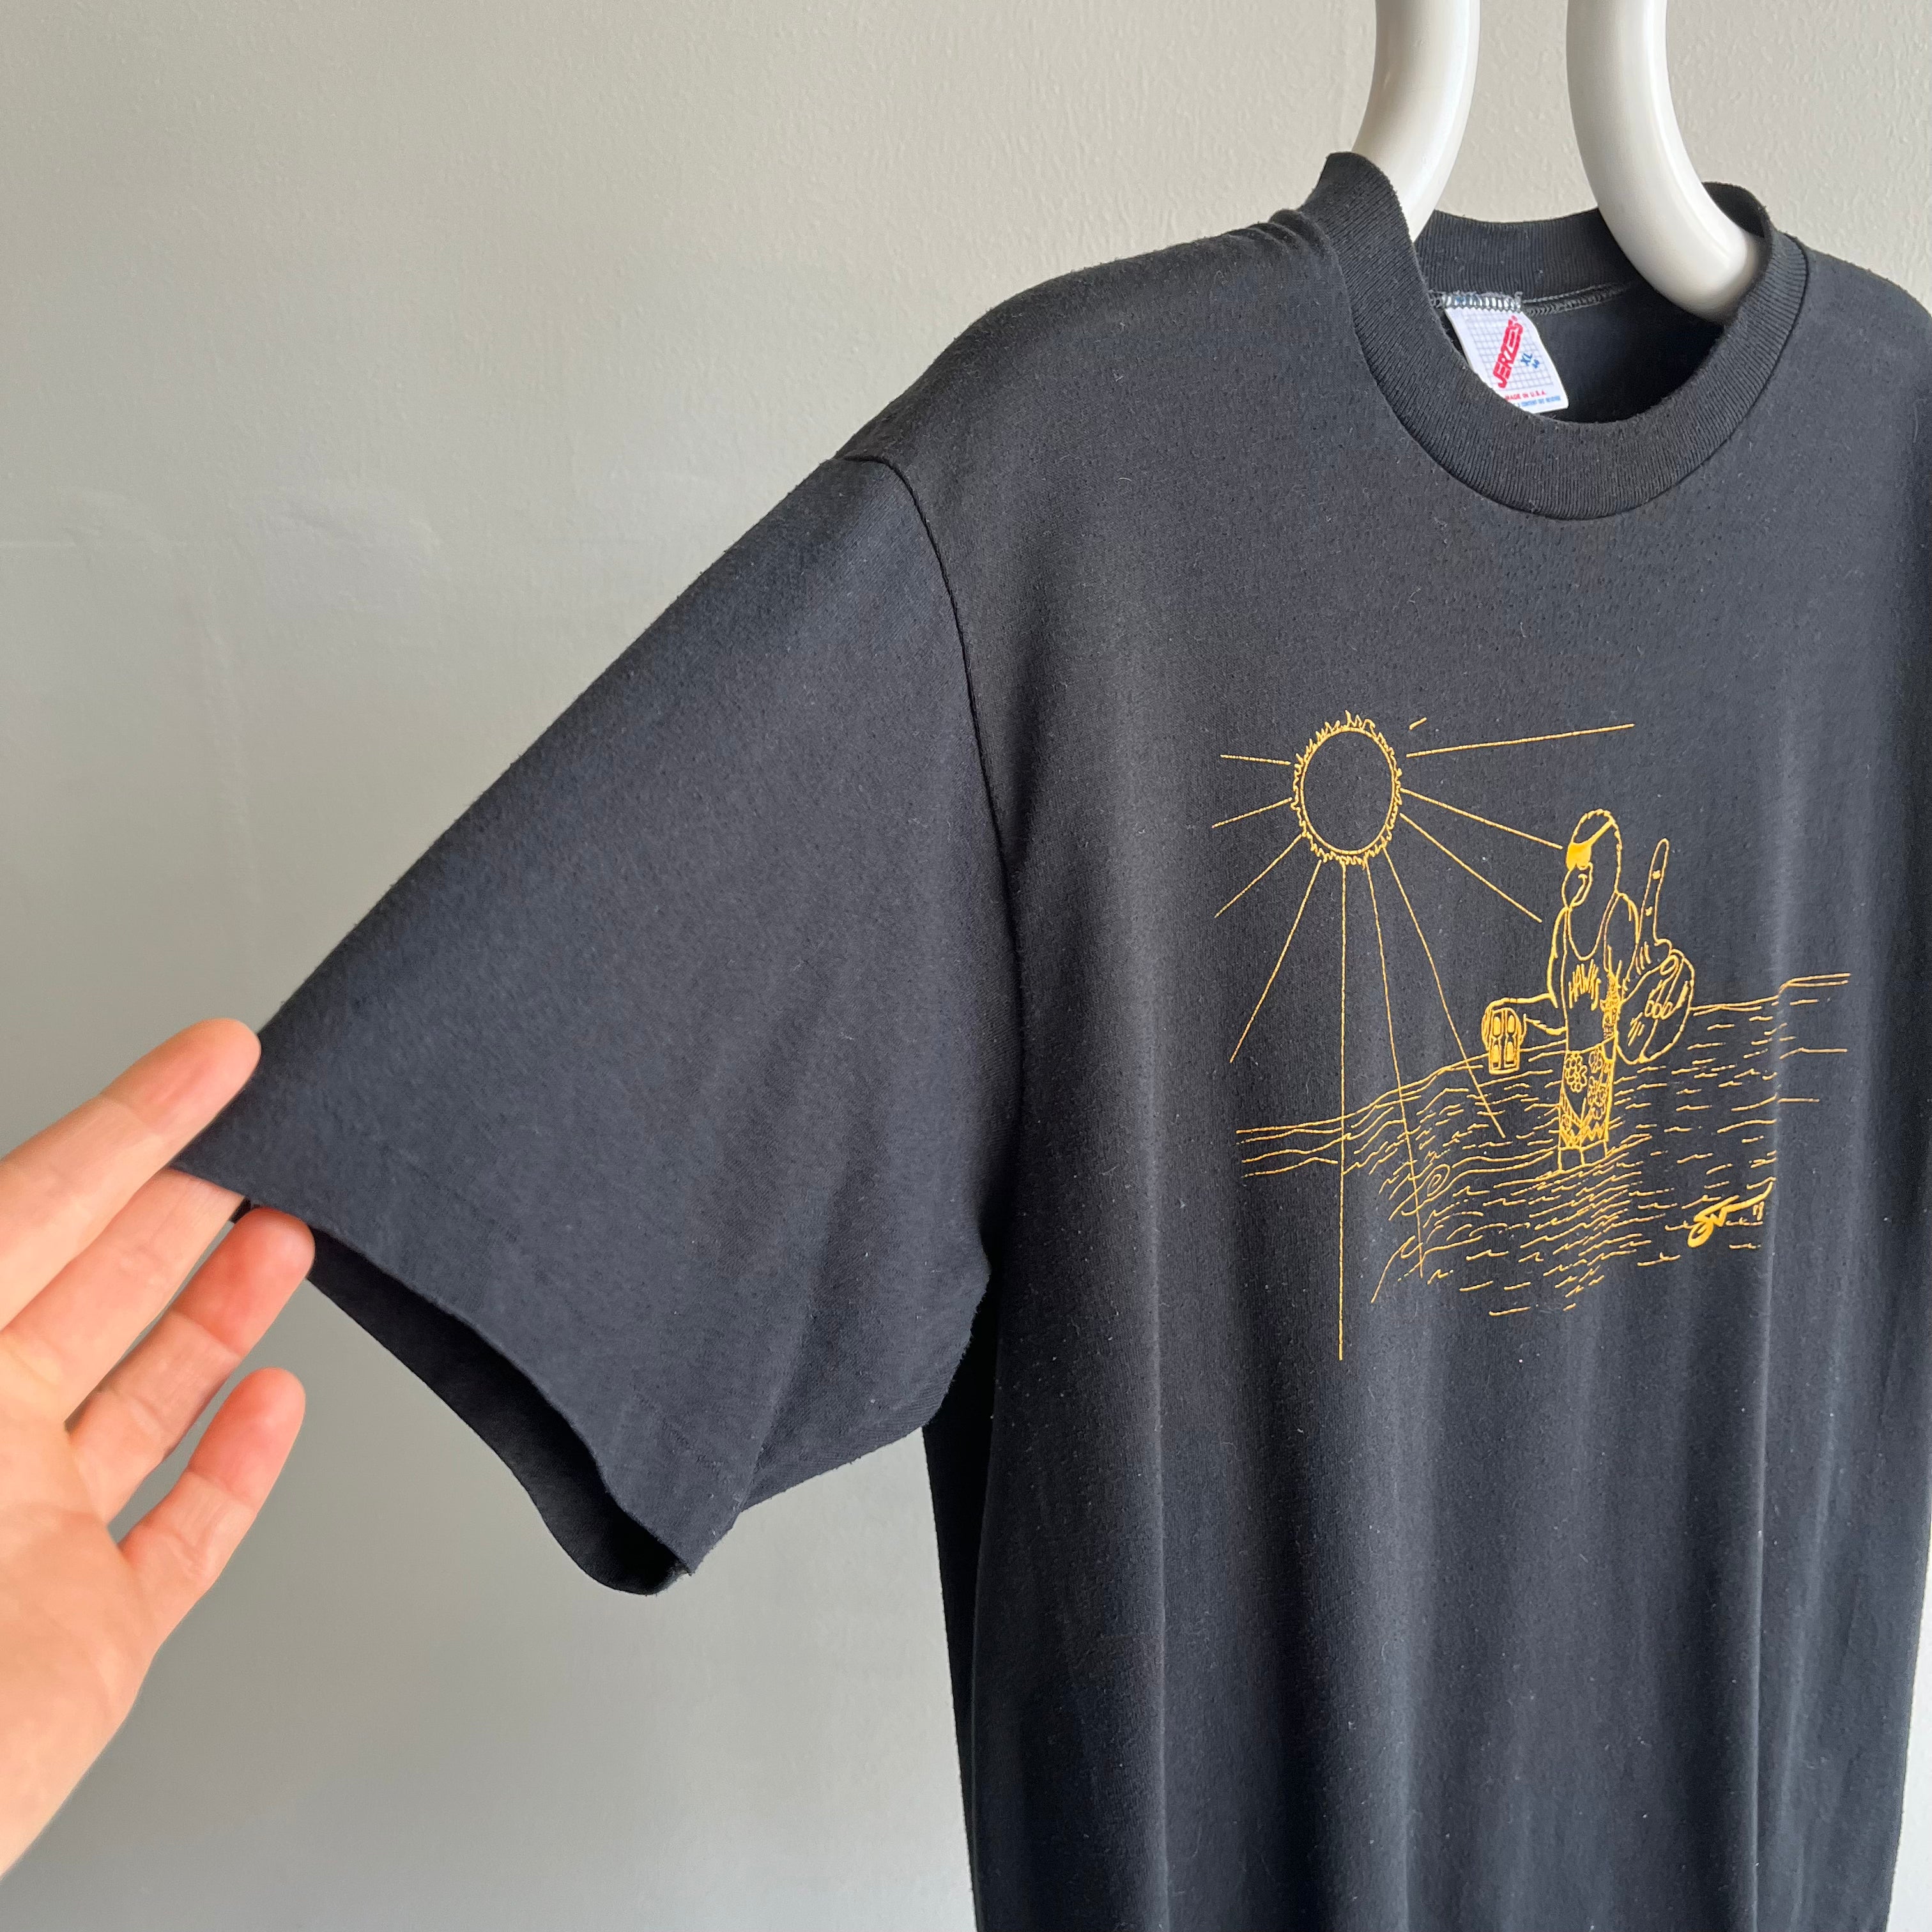 1980s Hudson Catholic Class of '88 Bird with Disproportionately Large Human Hand Random T-Shirt